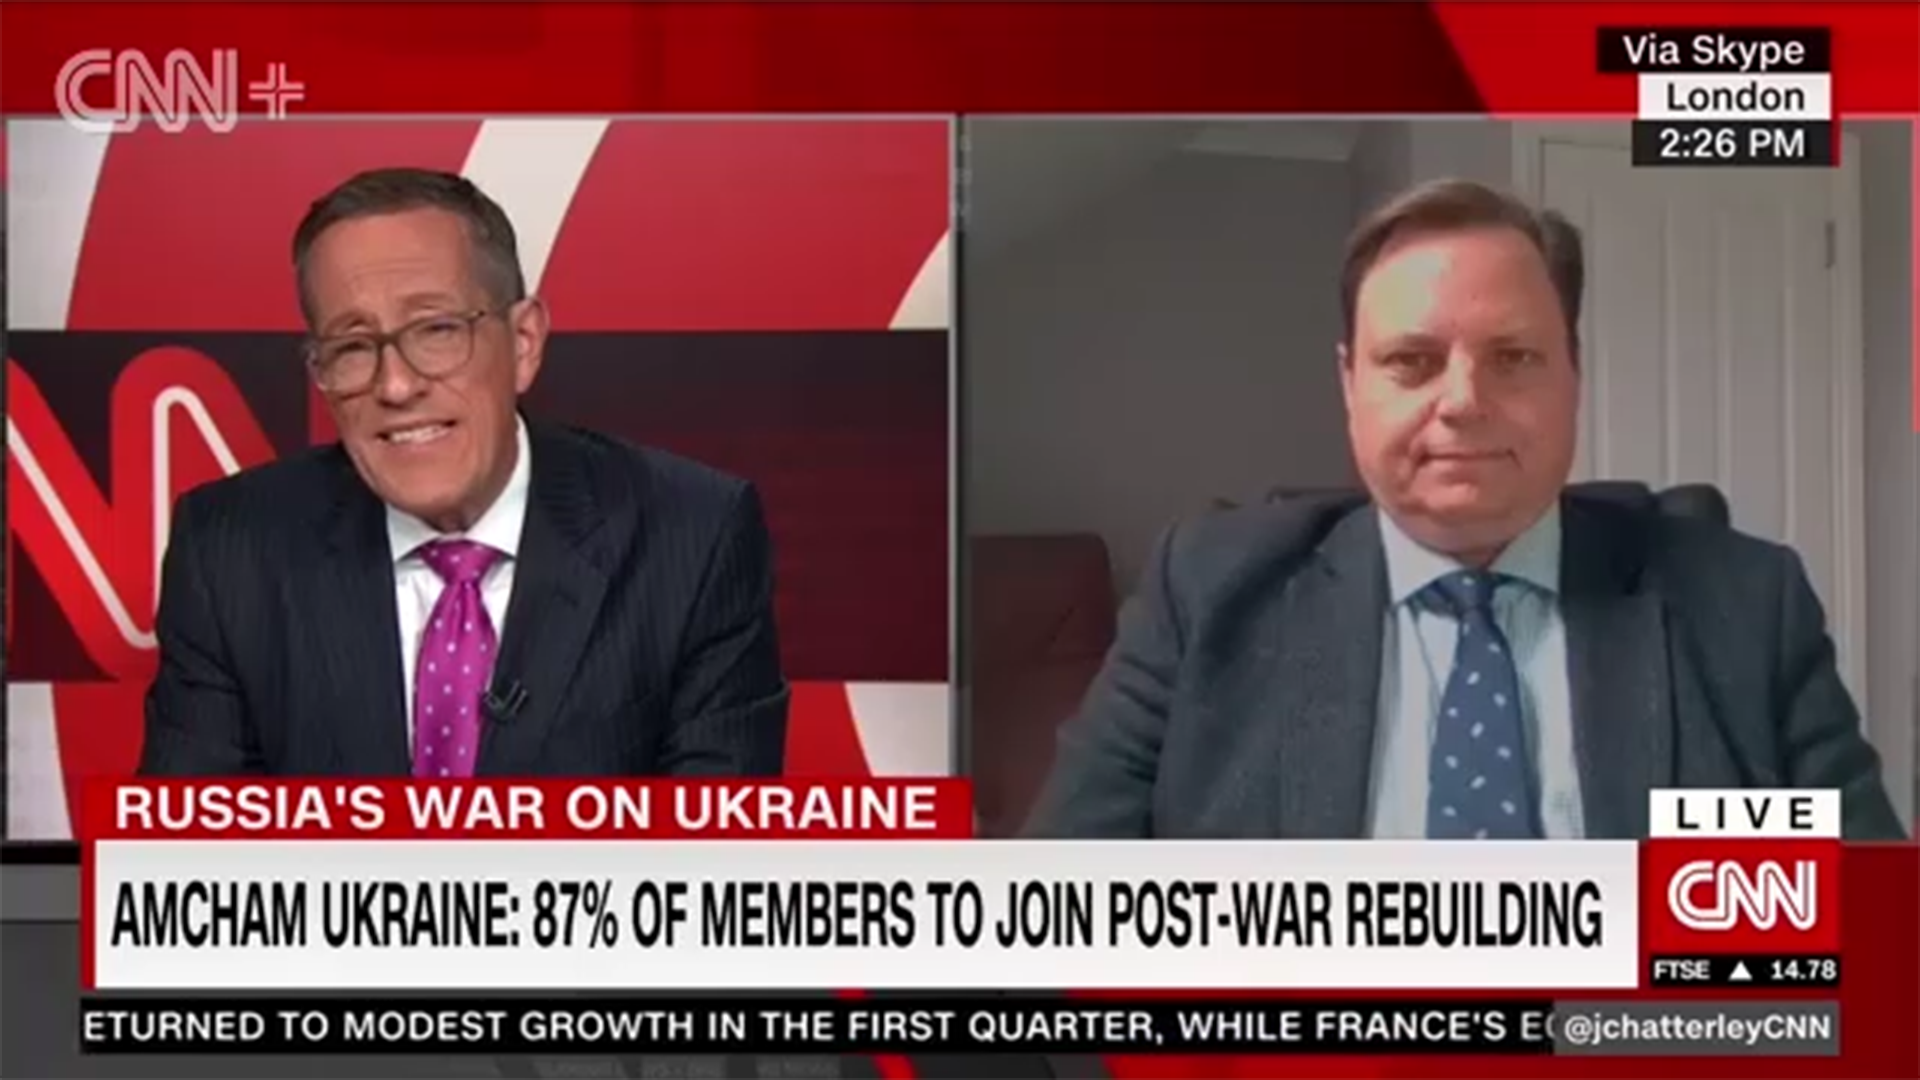 Interview by AmCham Ukraine President Andy Hunder on the war in Ukraine for CNN International